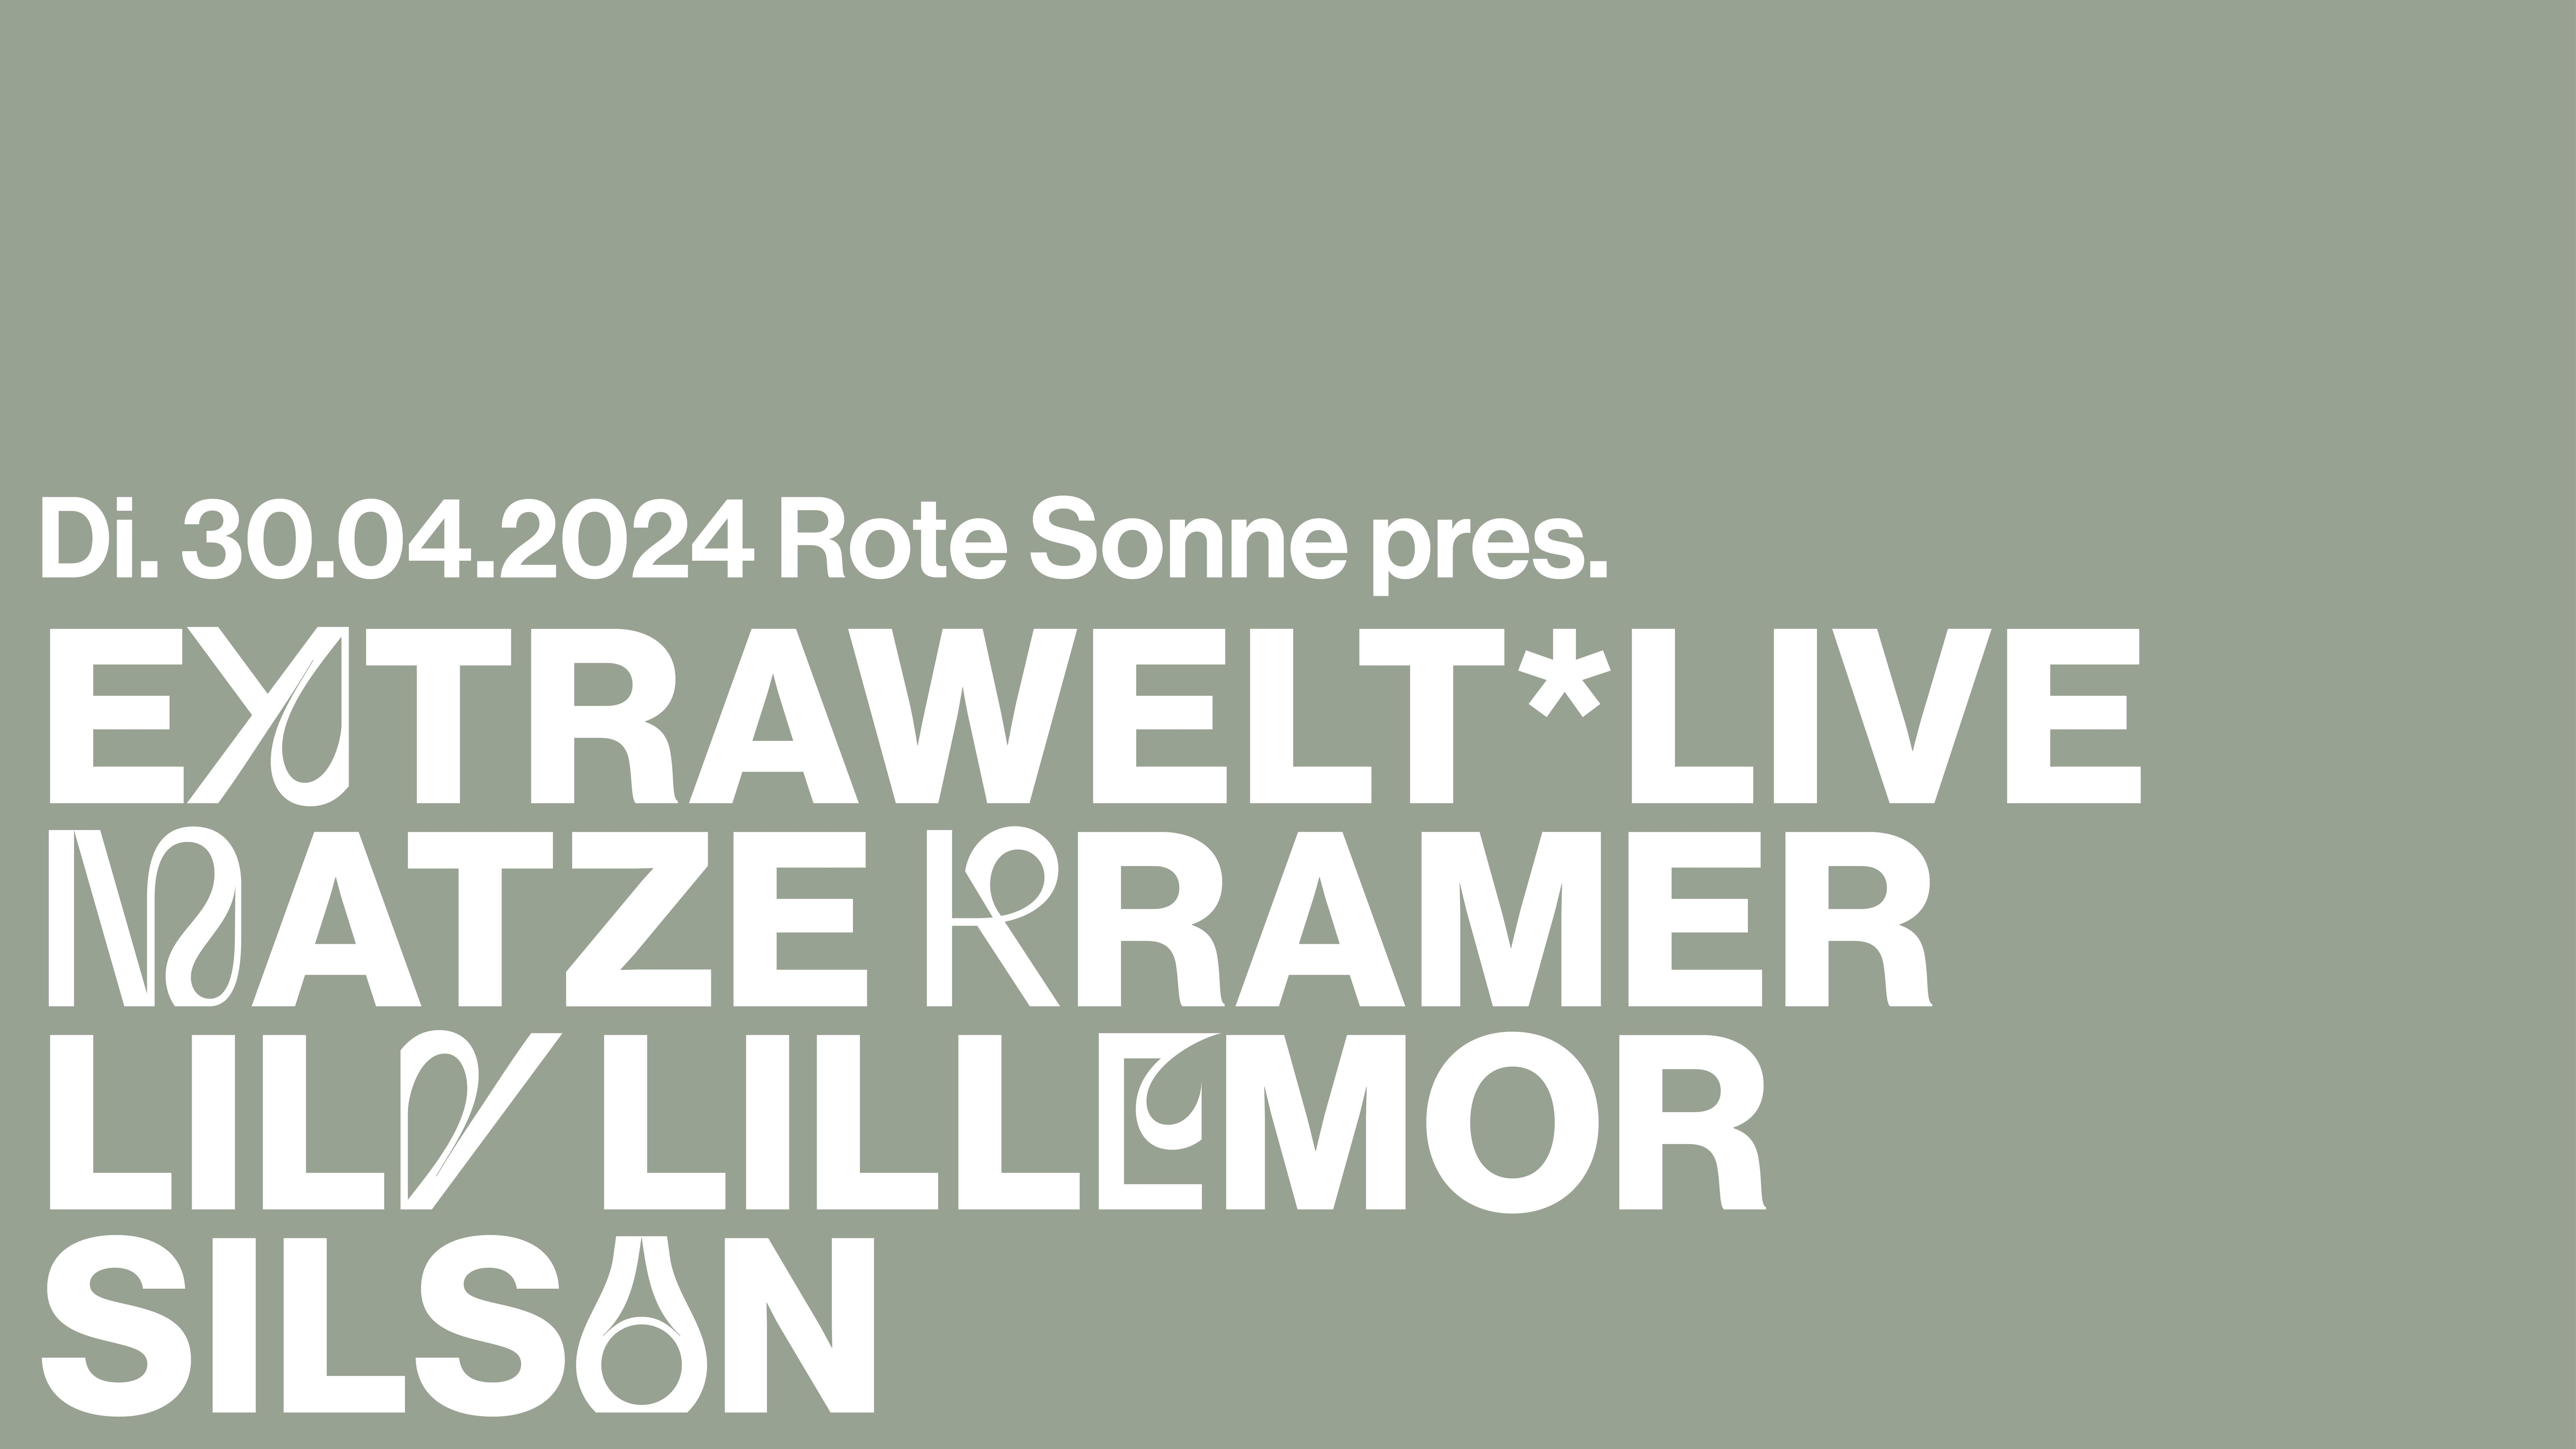 Rote Sonne pres. Extrawelt *live, Lily Lillemor, Matze Cramer, SILSAN - フライヤー表